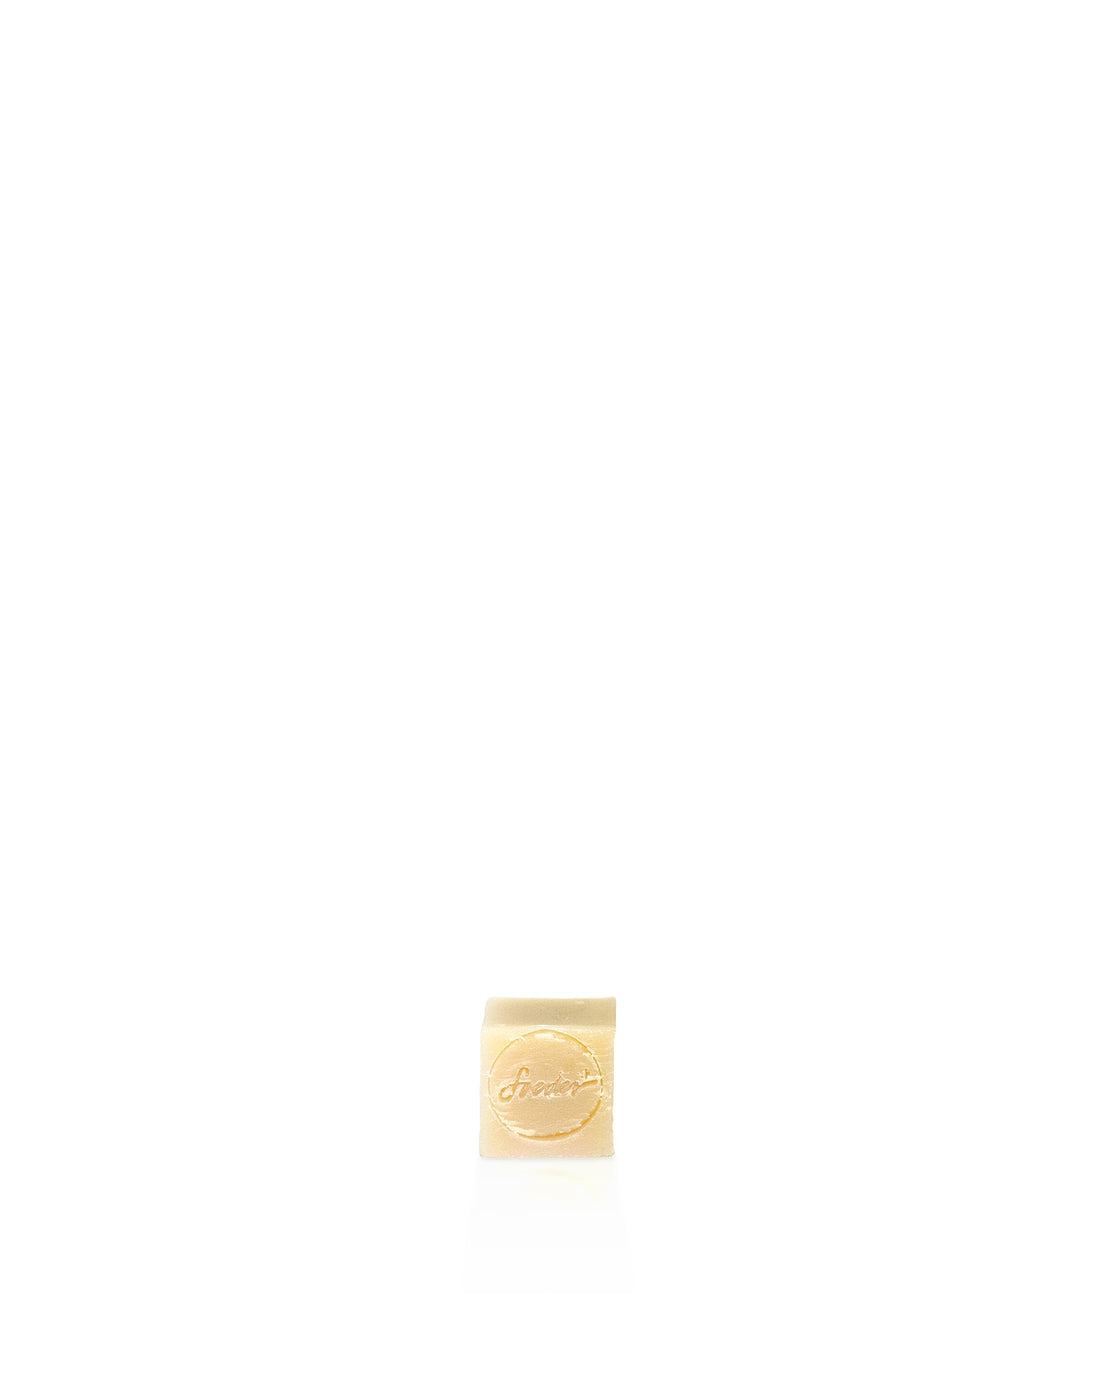 Soeder Natural Cold Process Bar Soap 25g